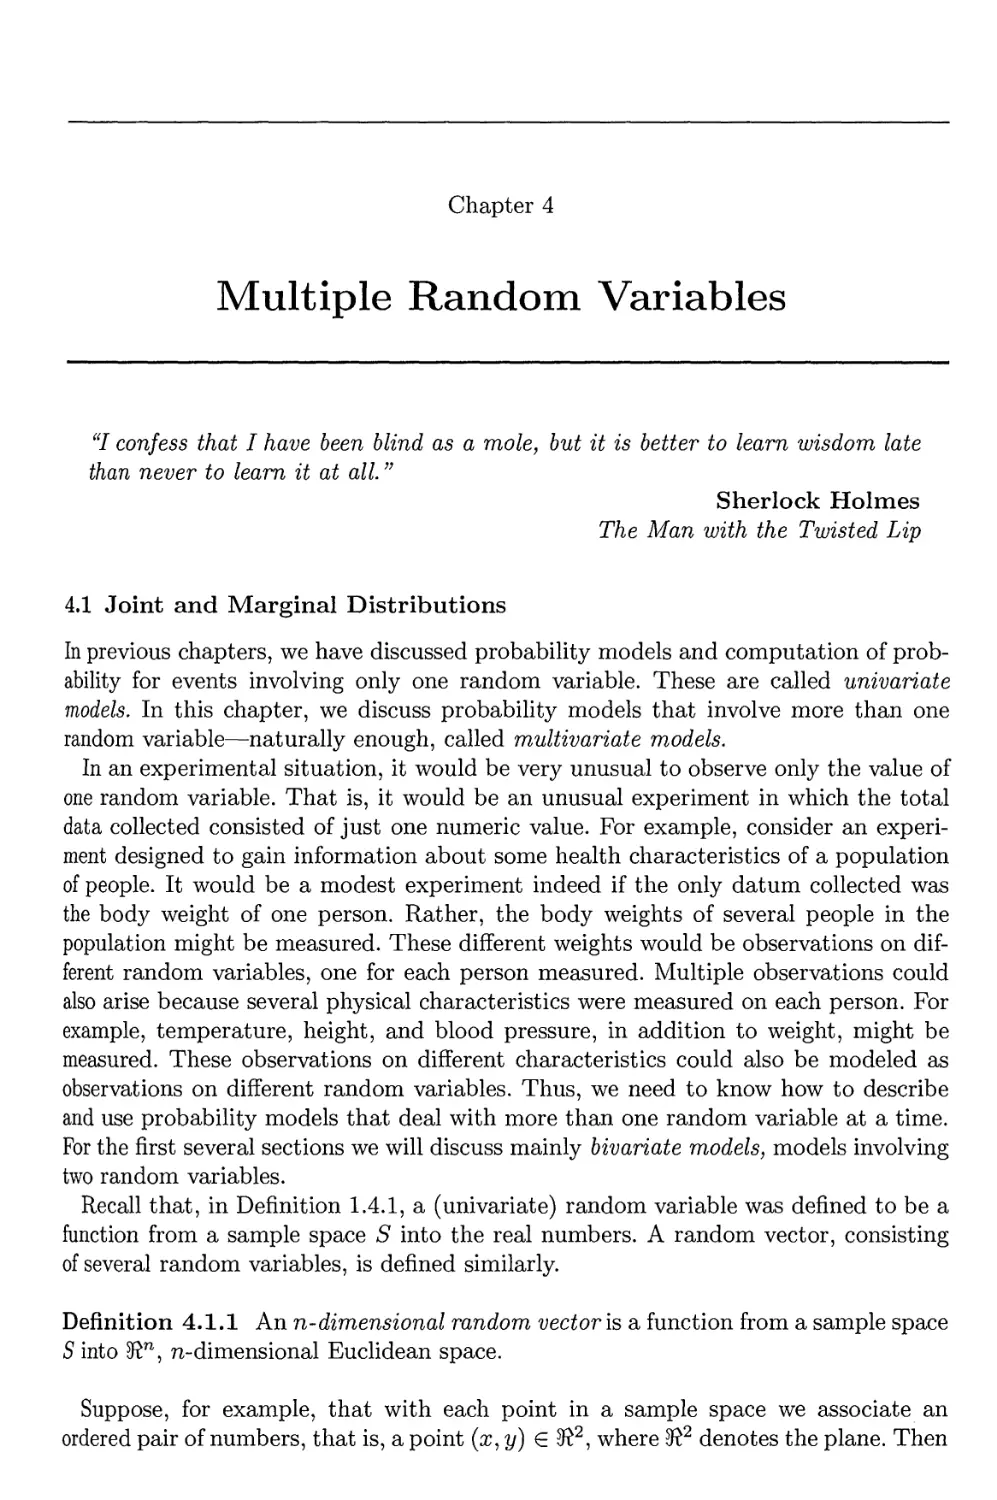 4. Multiple Random Variables